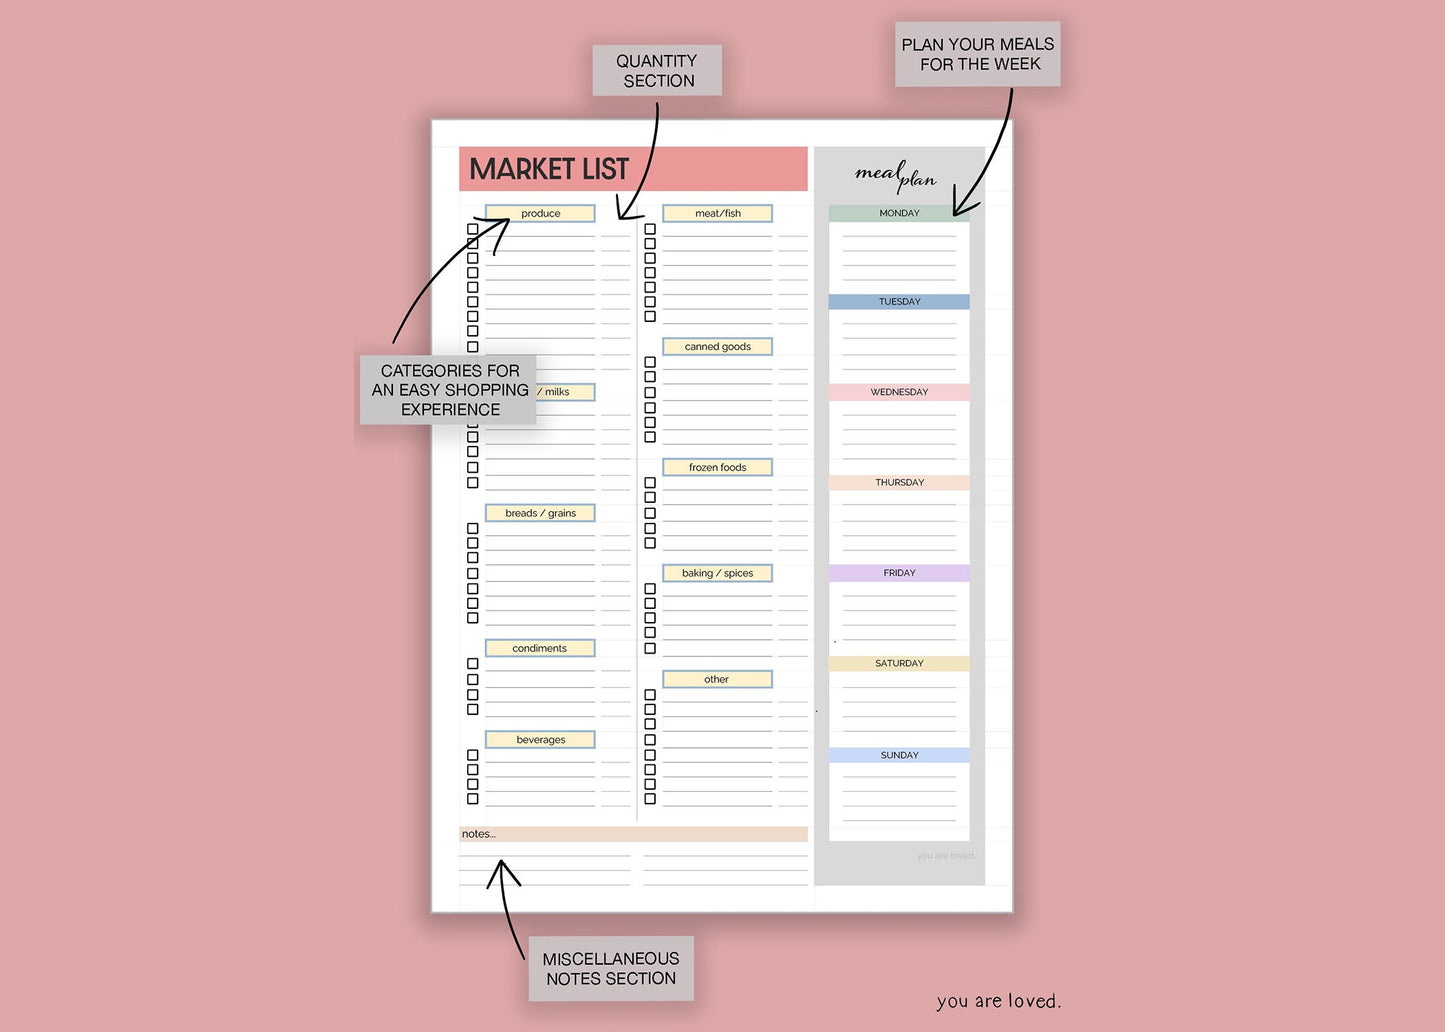 Grocery List & Meal Planner | Printable PDF